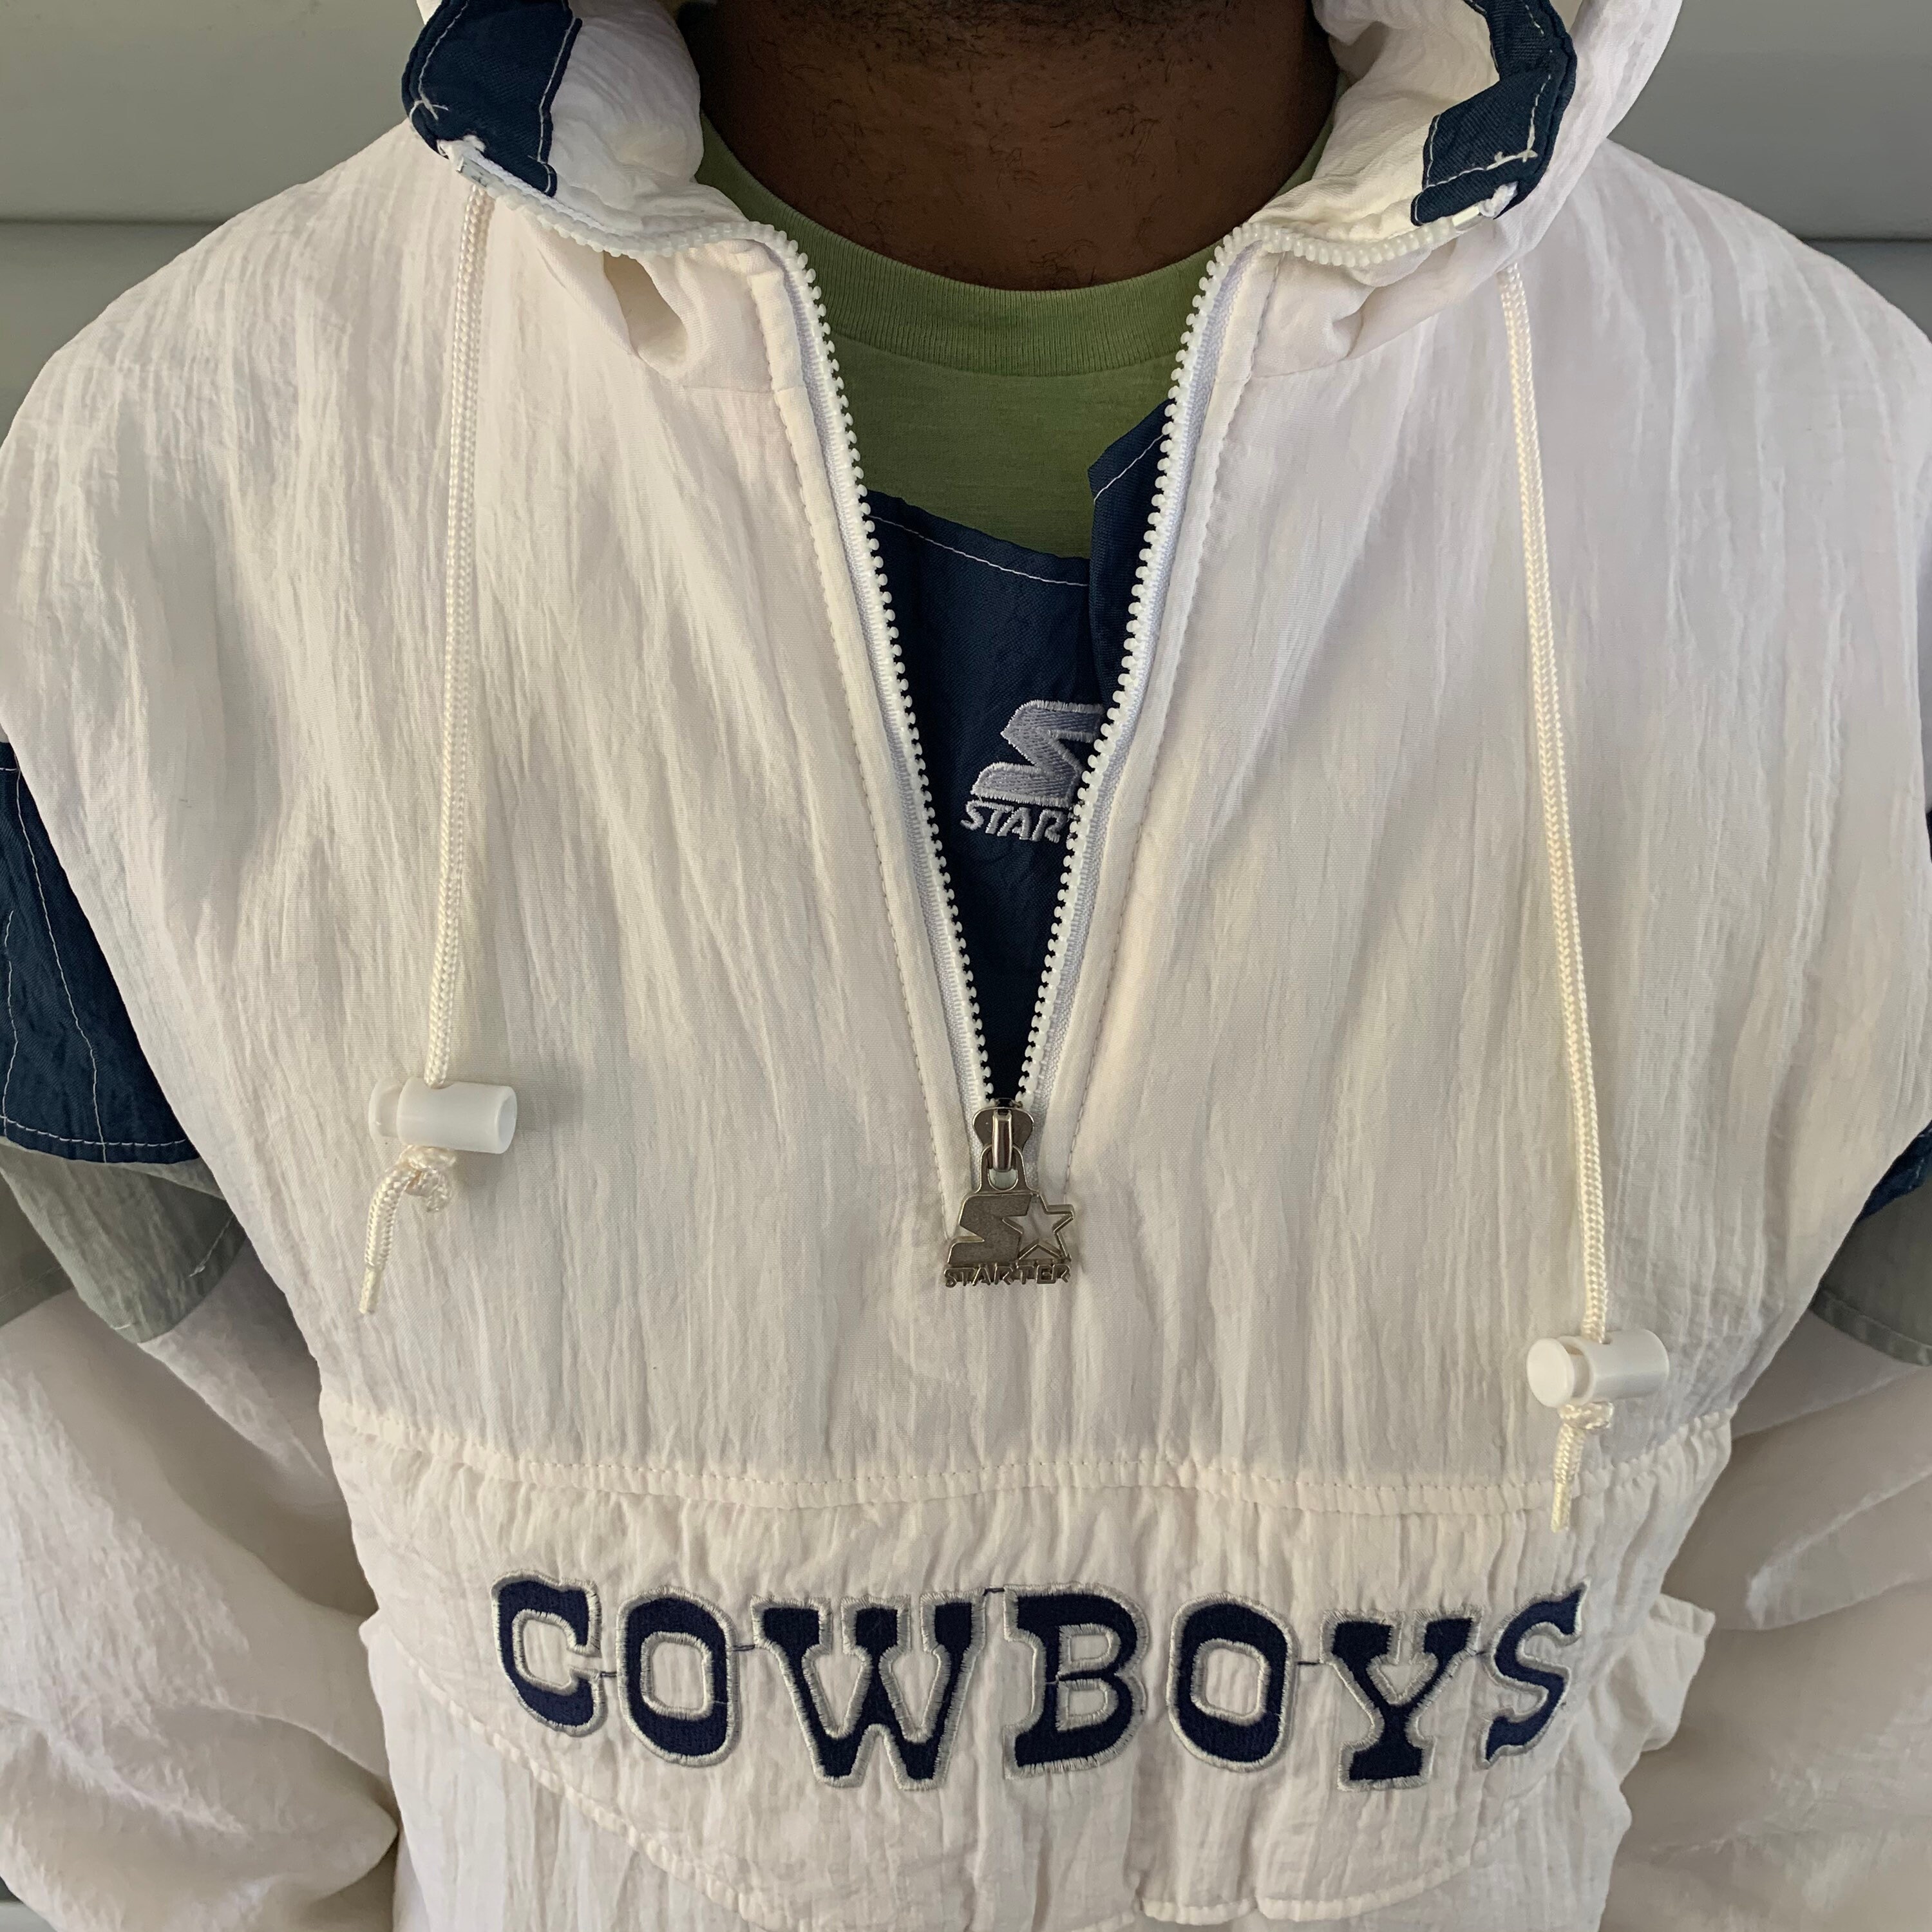 Found me a 90's era Starter jacket on  : r/cowboys